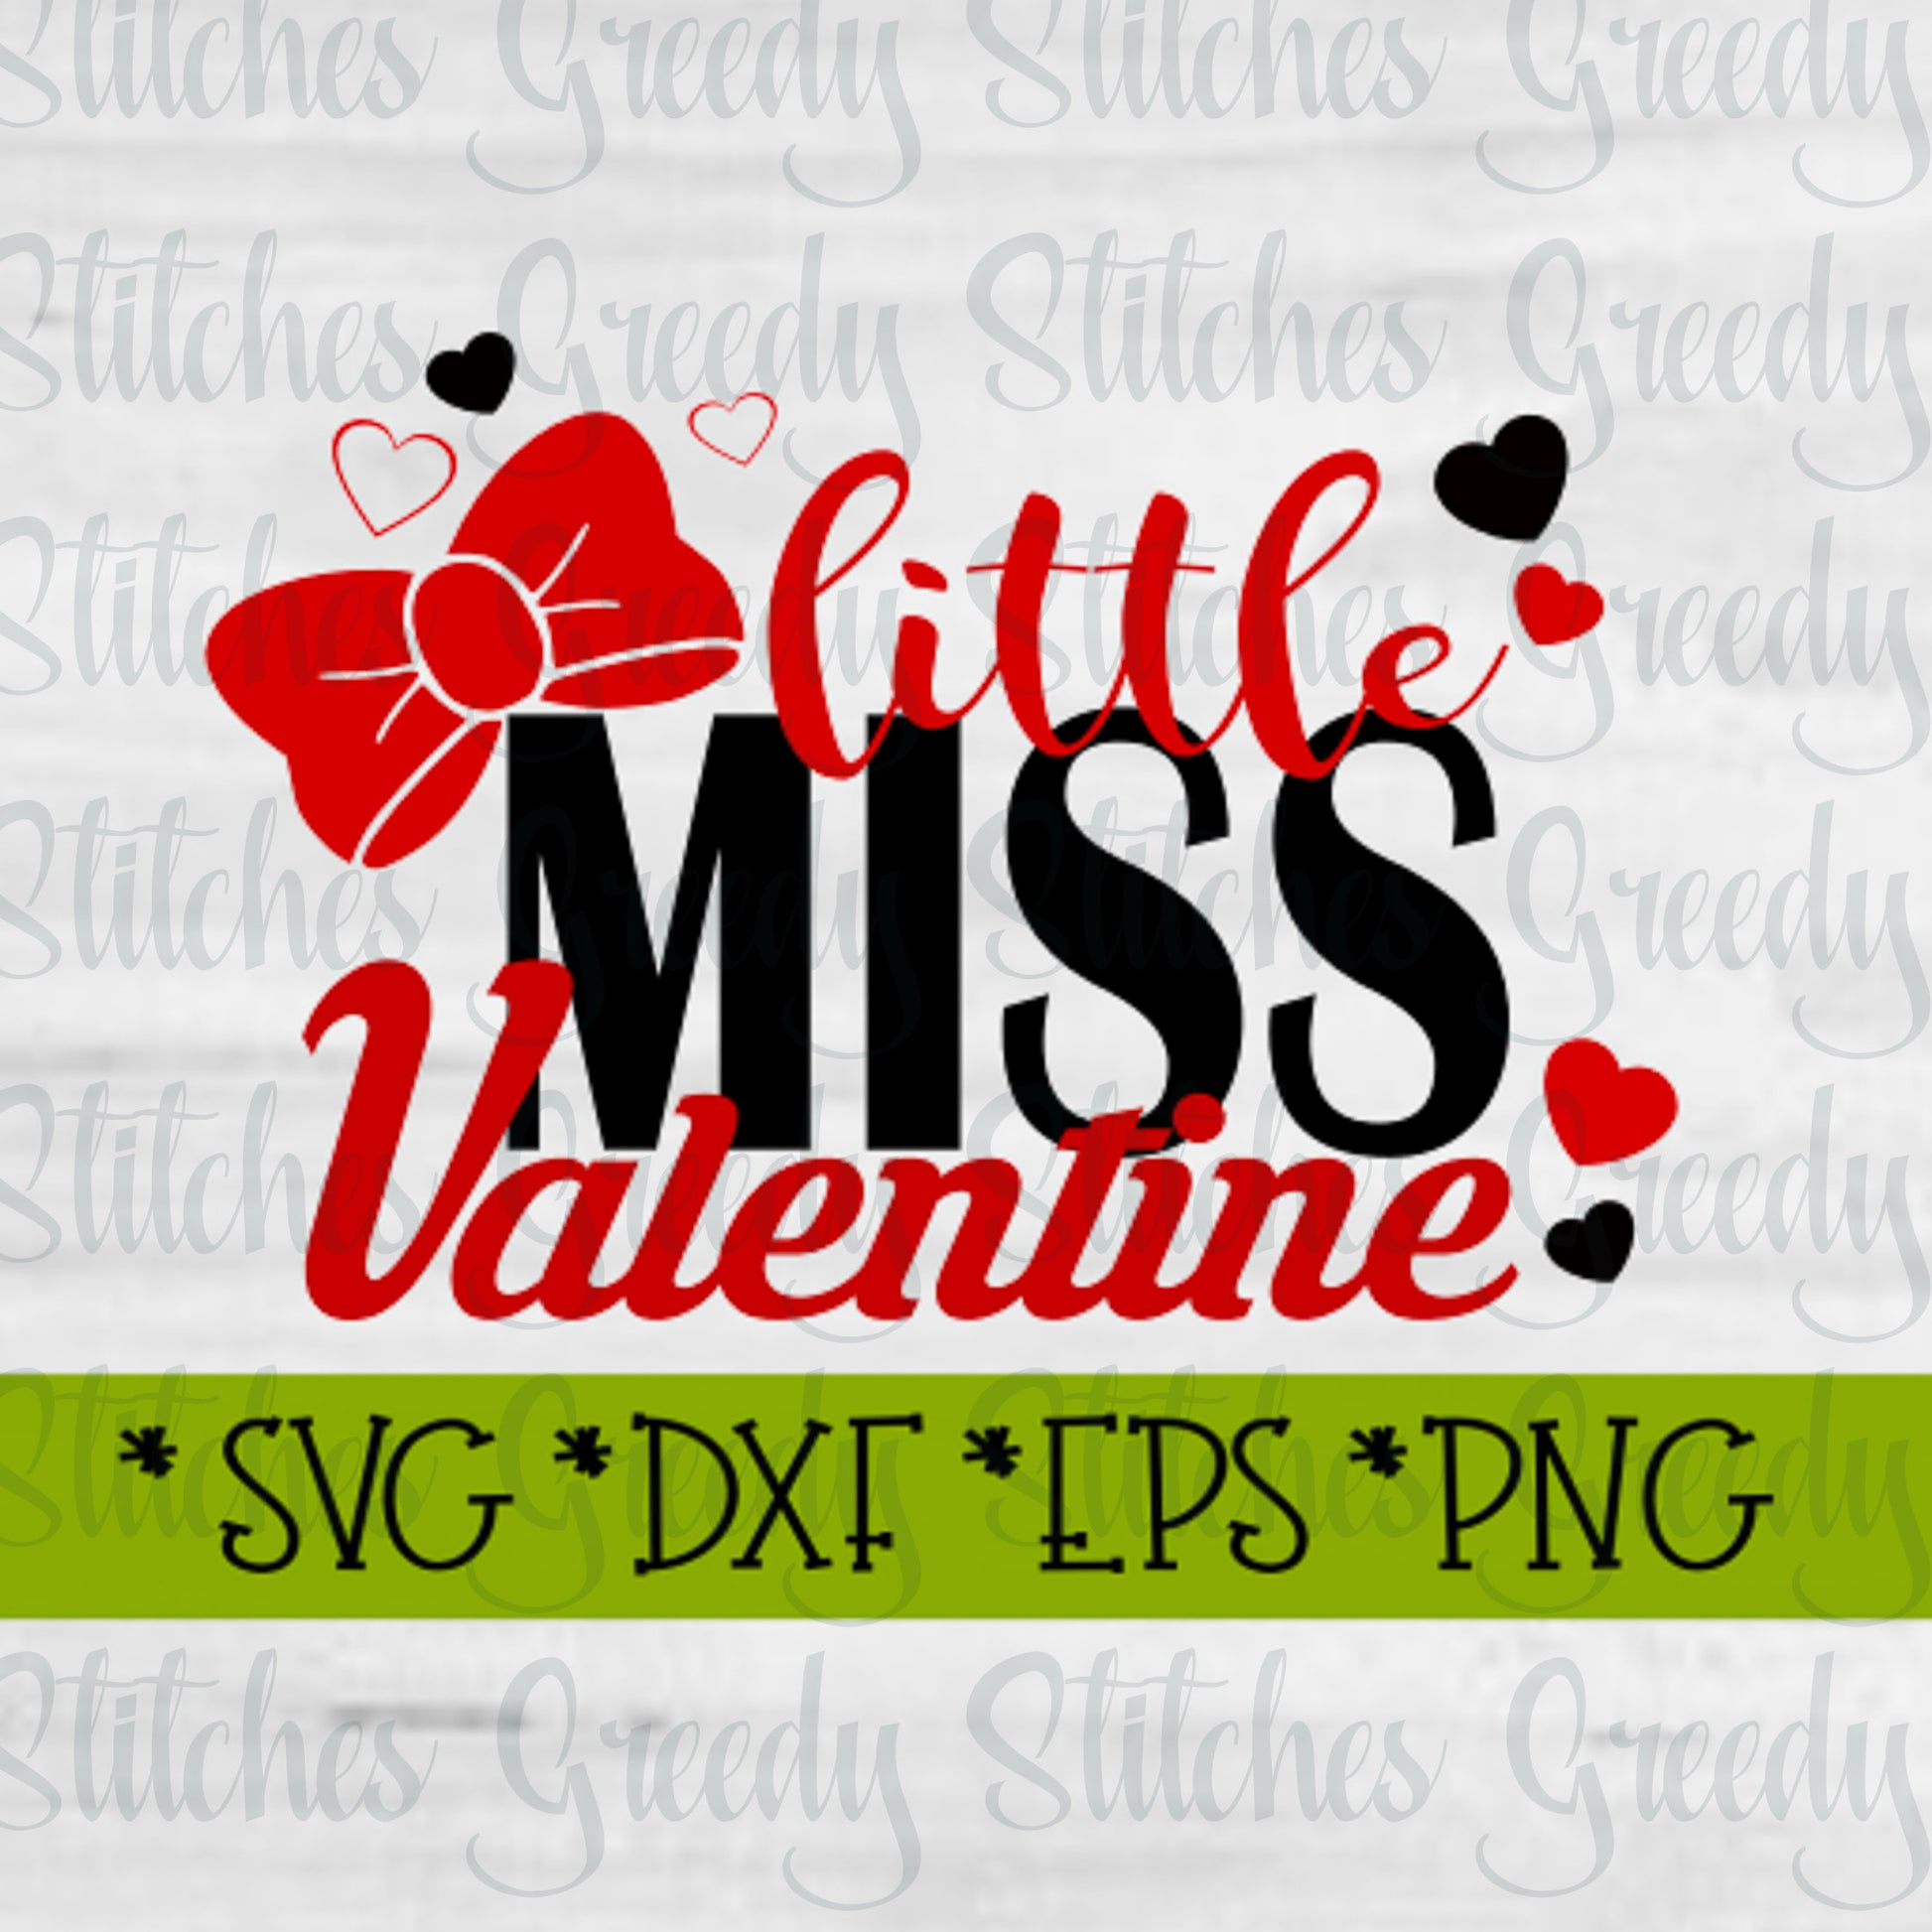 Little MIss Valentine svg, dxf, eps, png.  Miss Valentine SVG | Little Miss SvG | Valentine&#39;s Day SvG | Instant Download Cut Files.